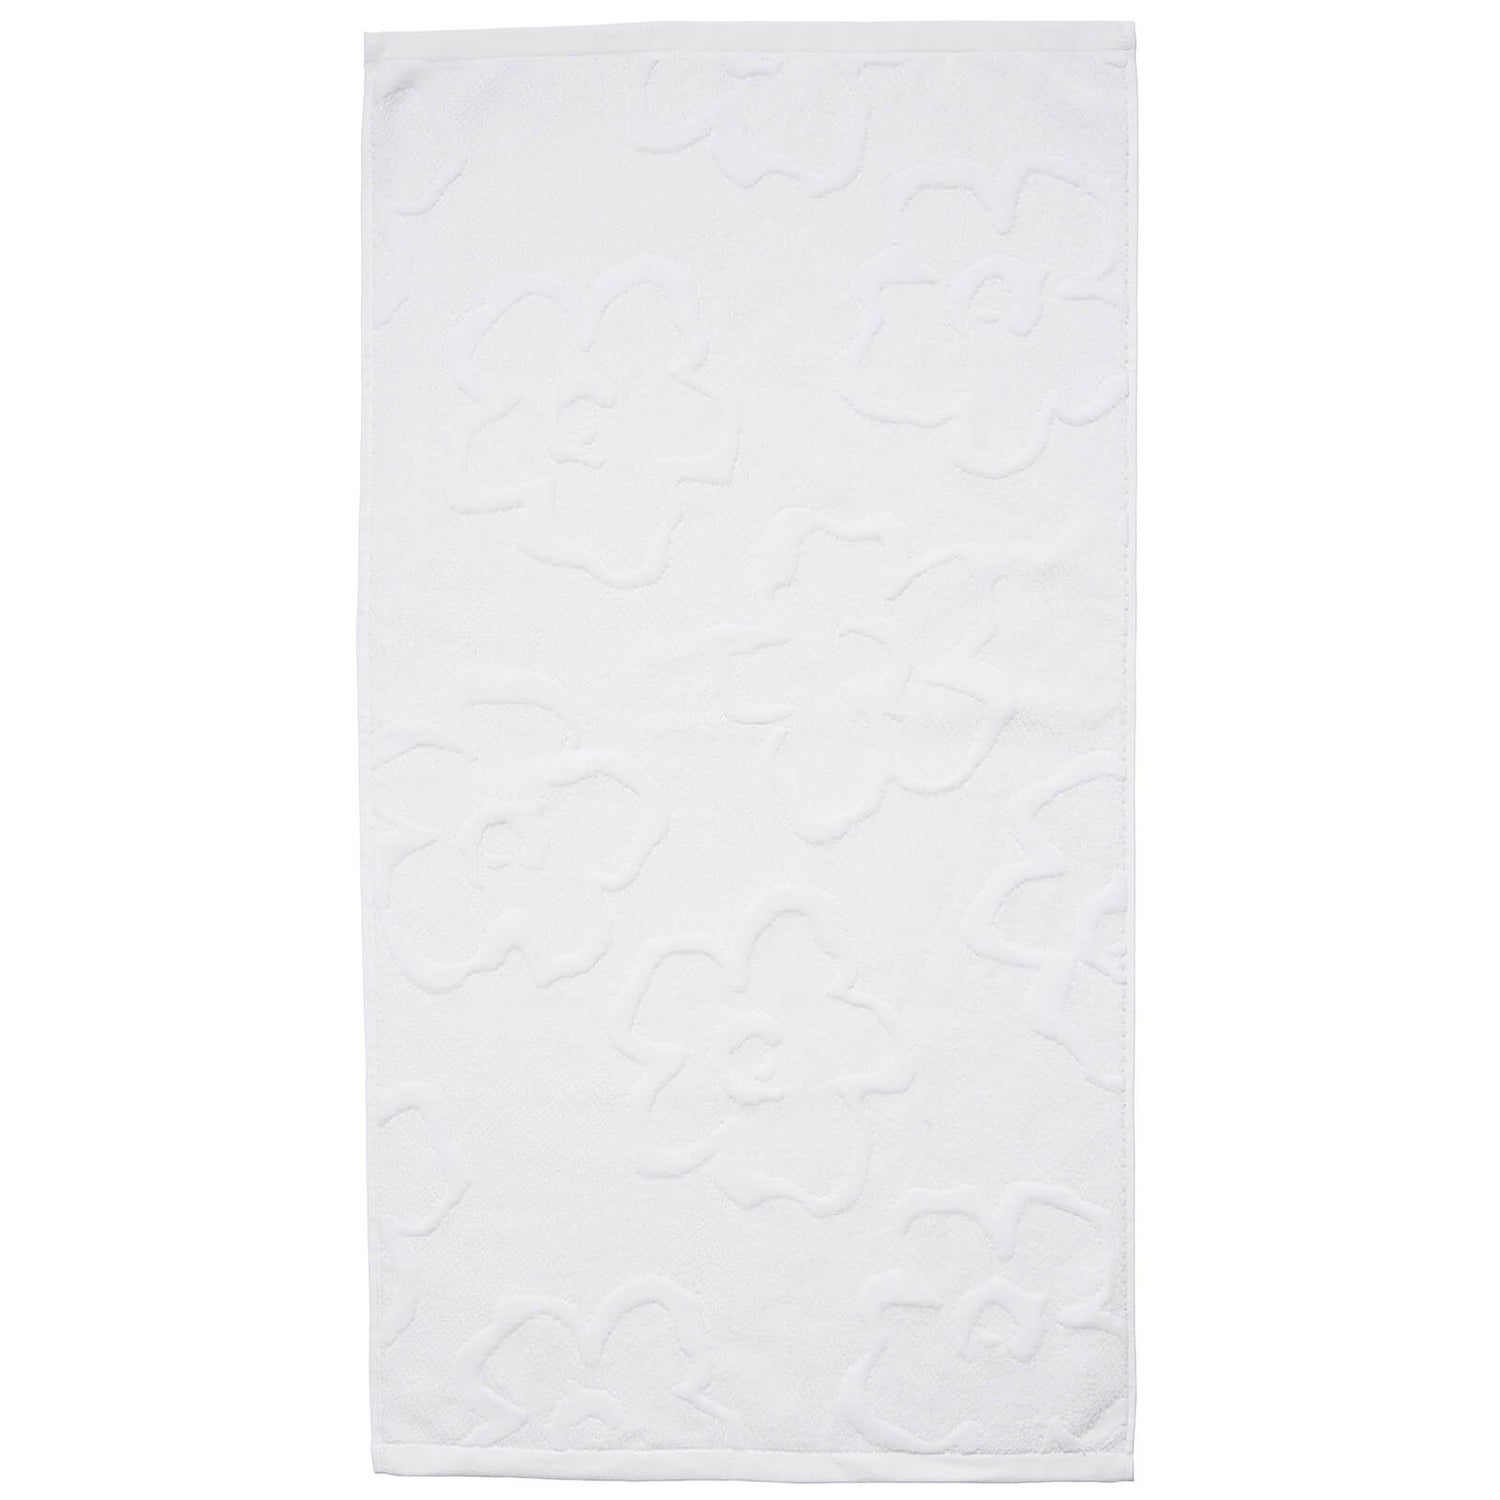 Ted Baker Magnolia Towel - White - Großes Badetuch